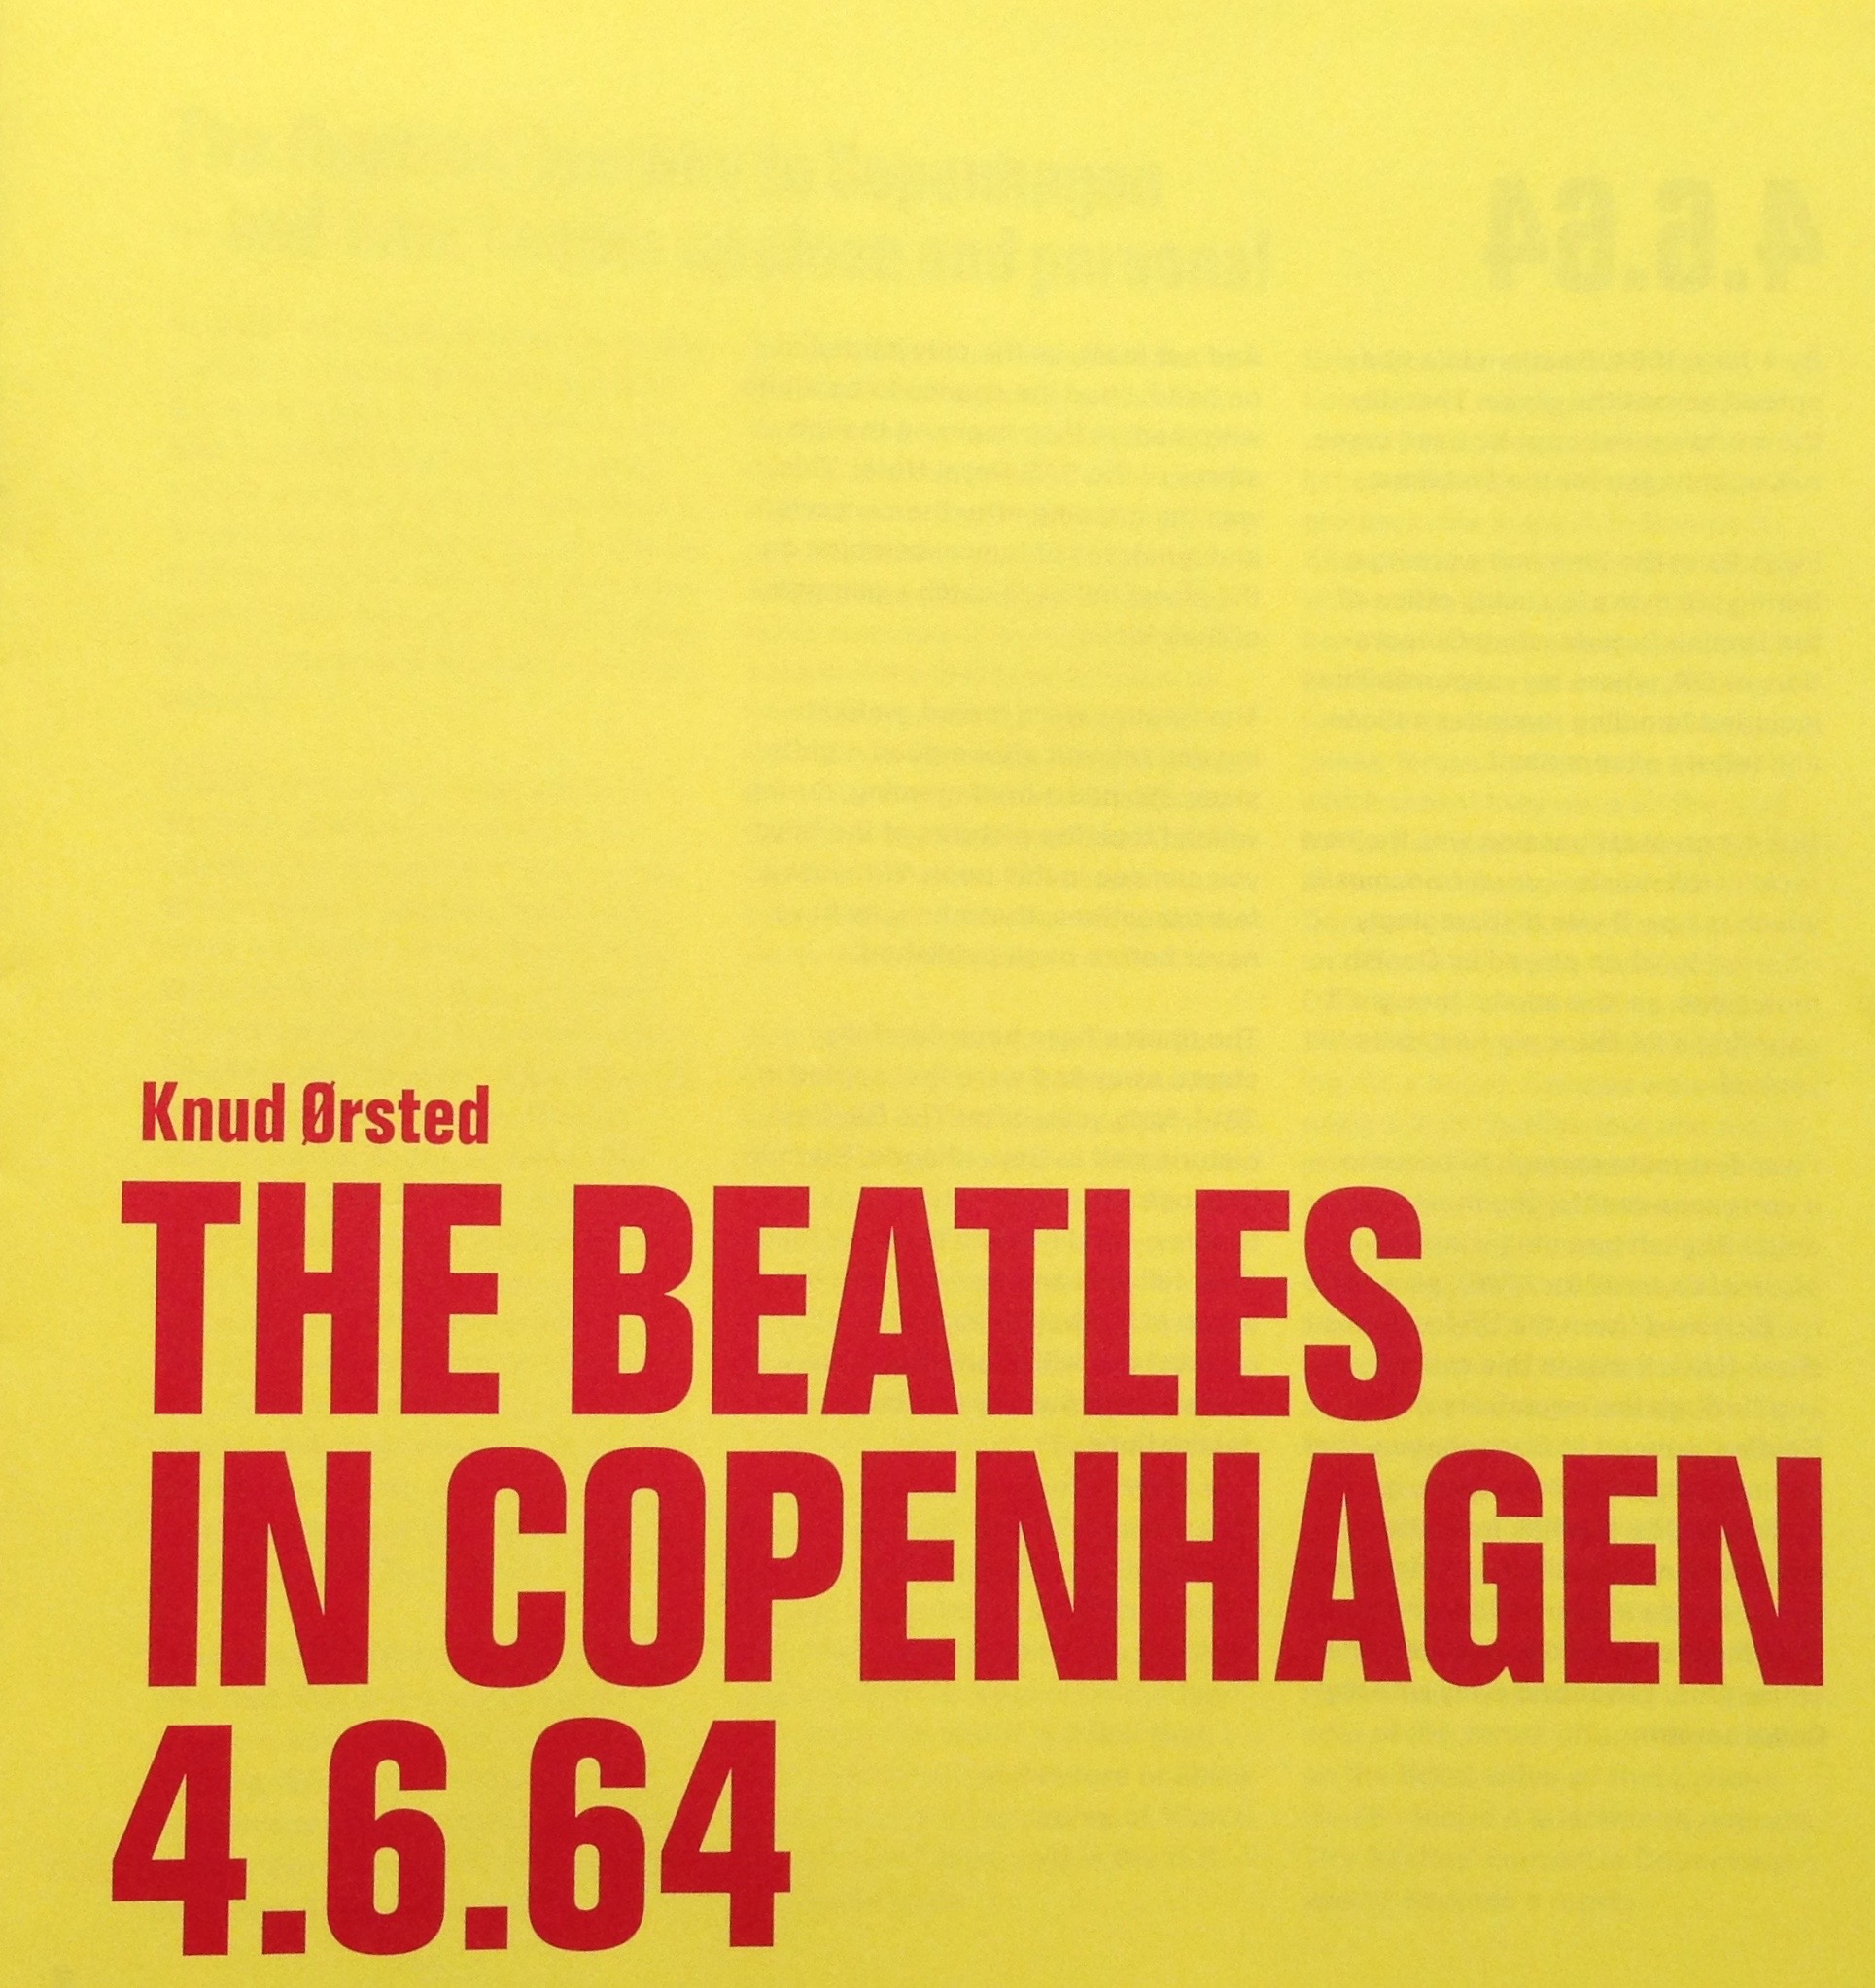 The Beatles in Copenhagen 4.6.64 by Knud Ørsted